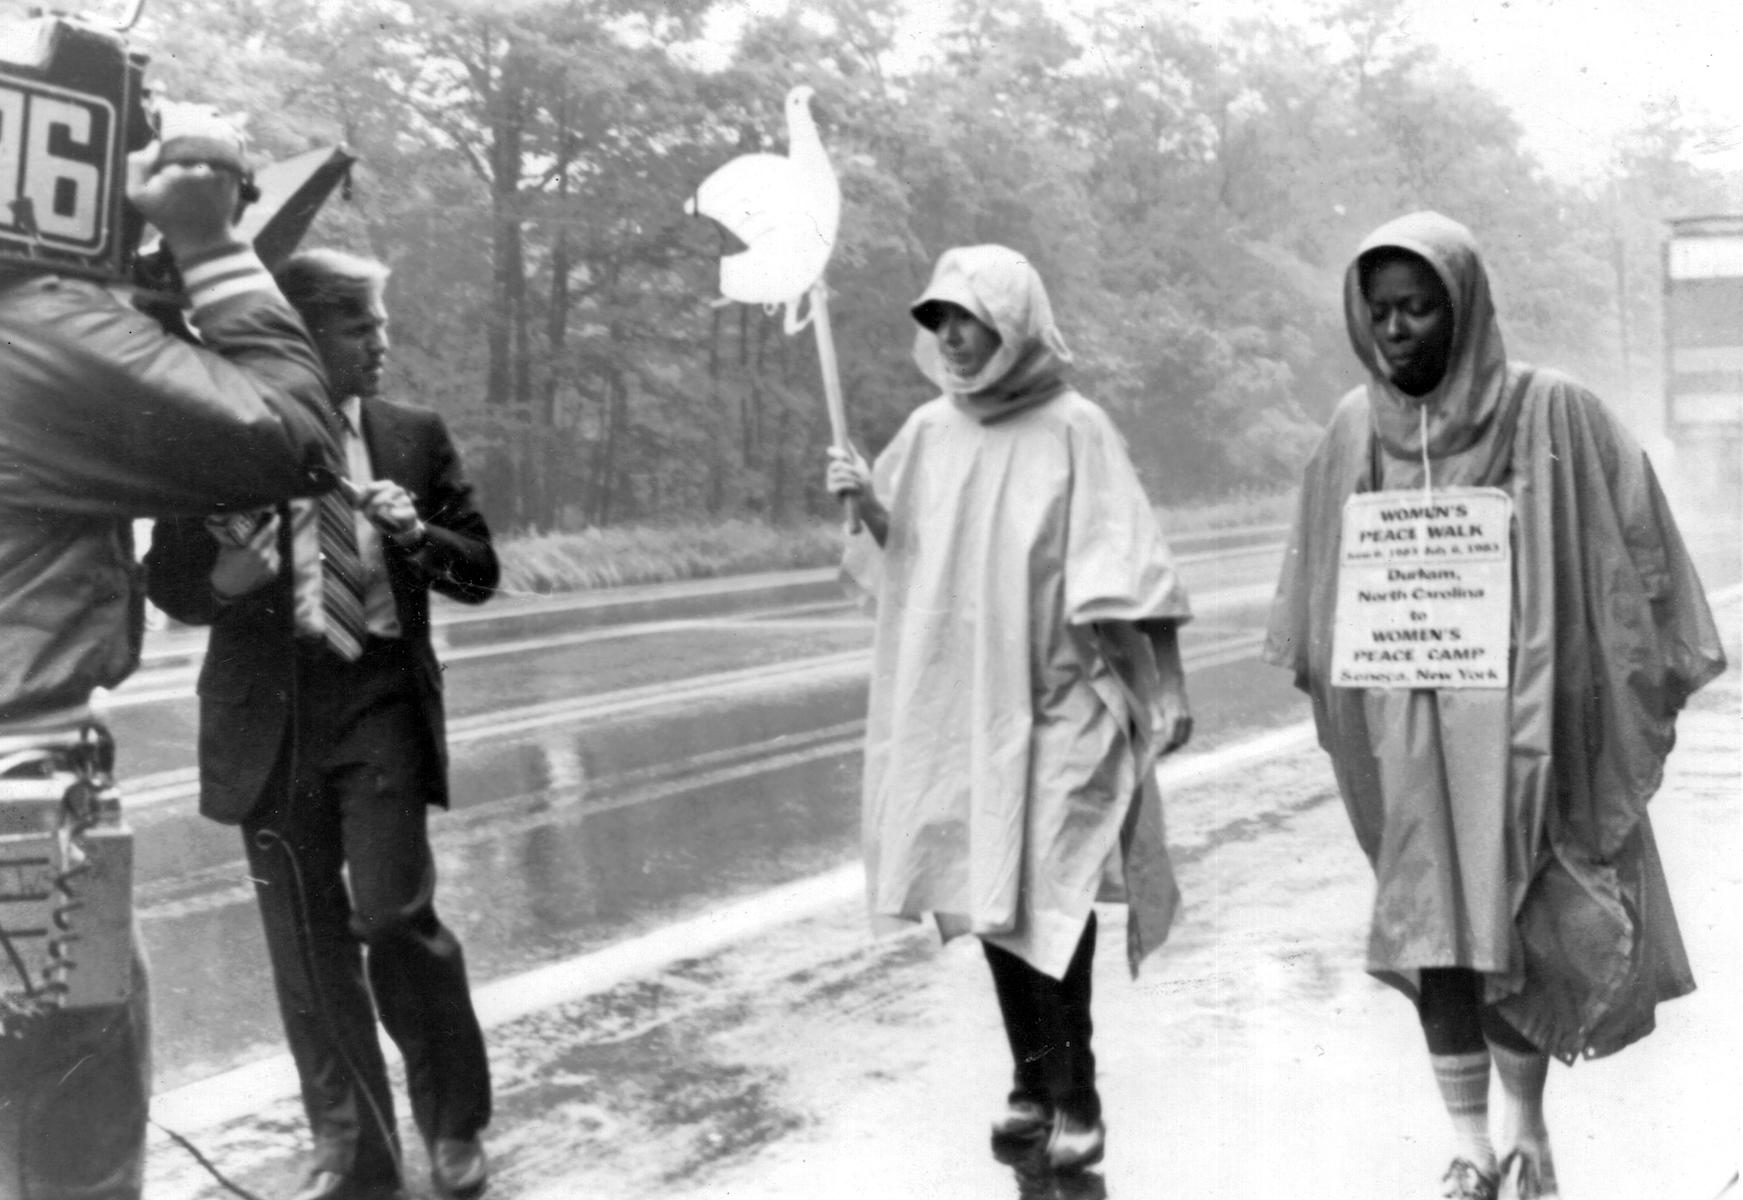 Mandy Carter and Judy Winston on the War Resisters League/Southeast Women’s Peace Walk to the Seneca Women’s Peace Encampment, 1983, Seneca, NY. Photo courtesy of Mandy Carter.